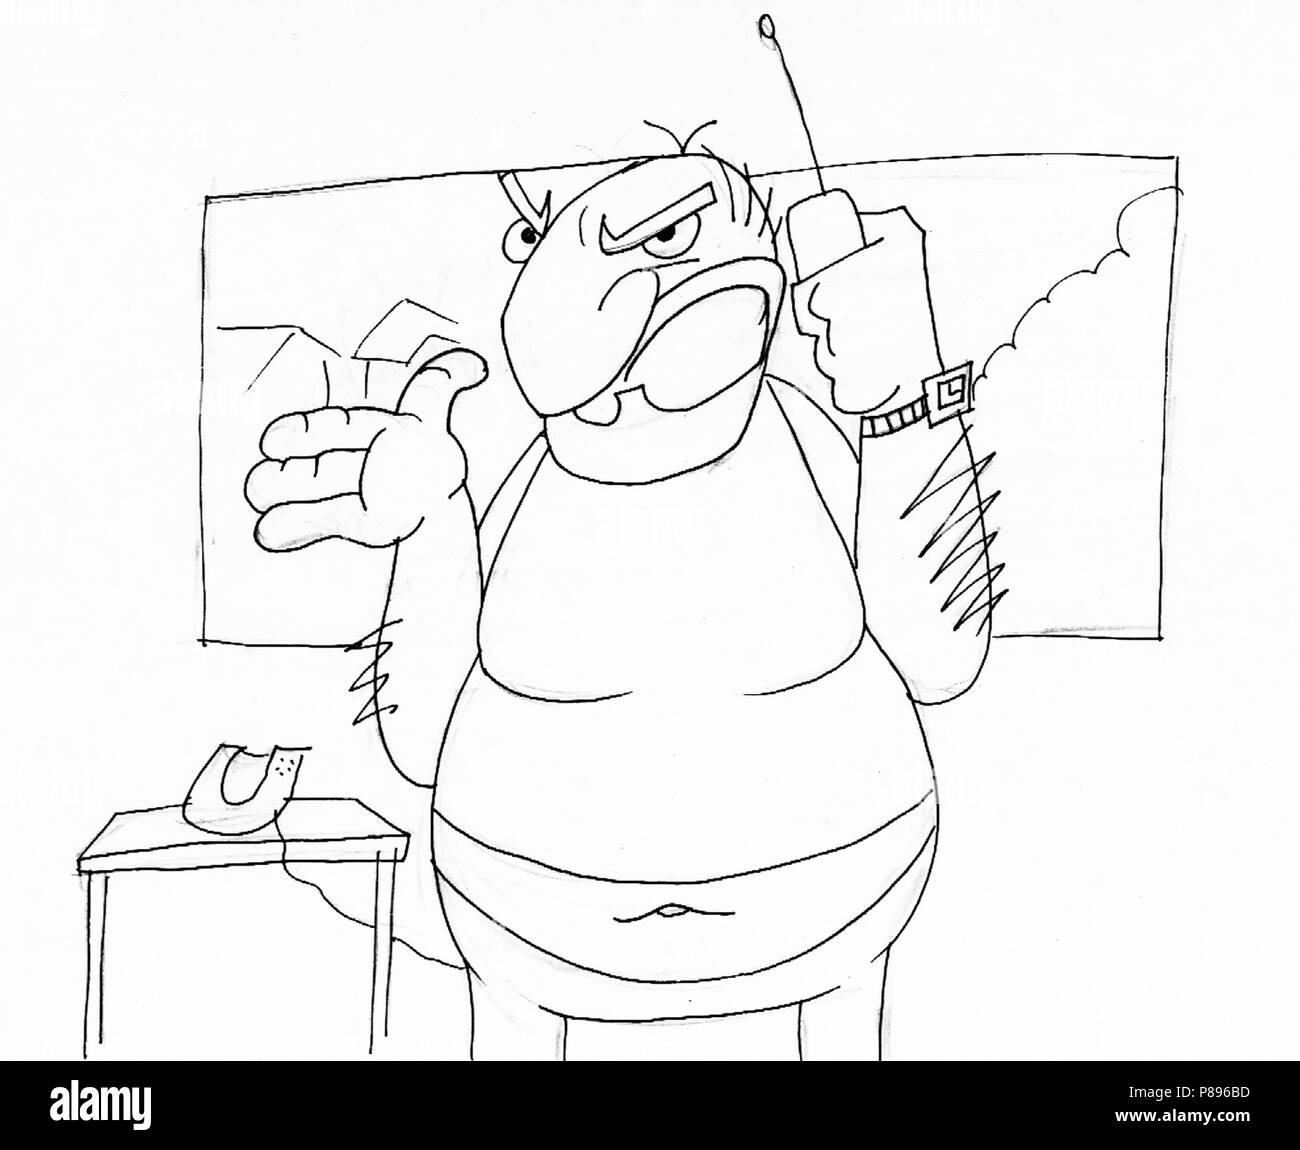 black and white cartoon character illustration Stock Photo